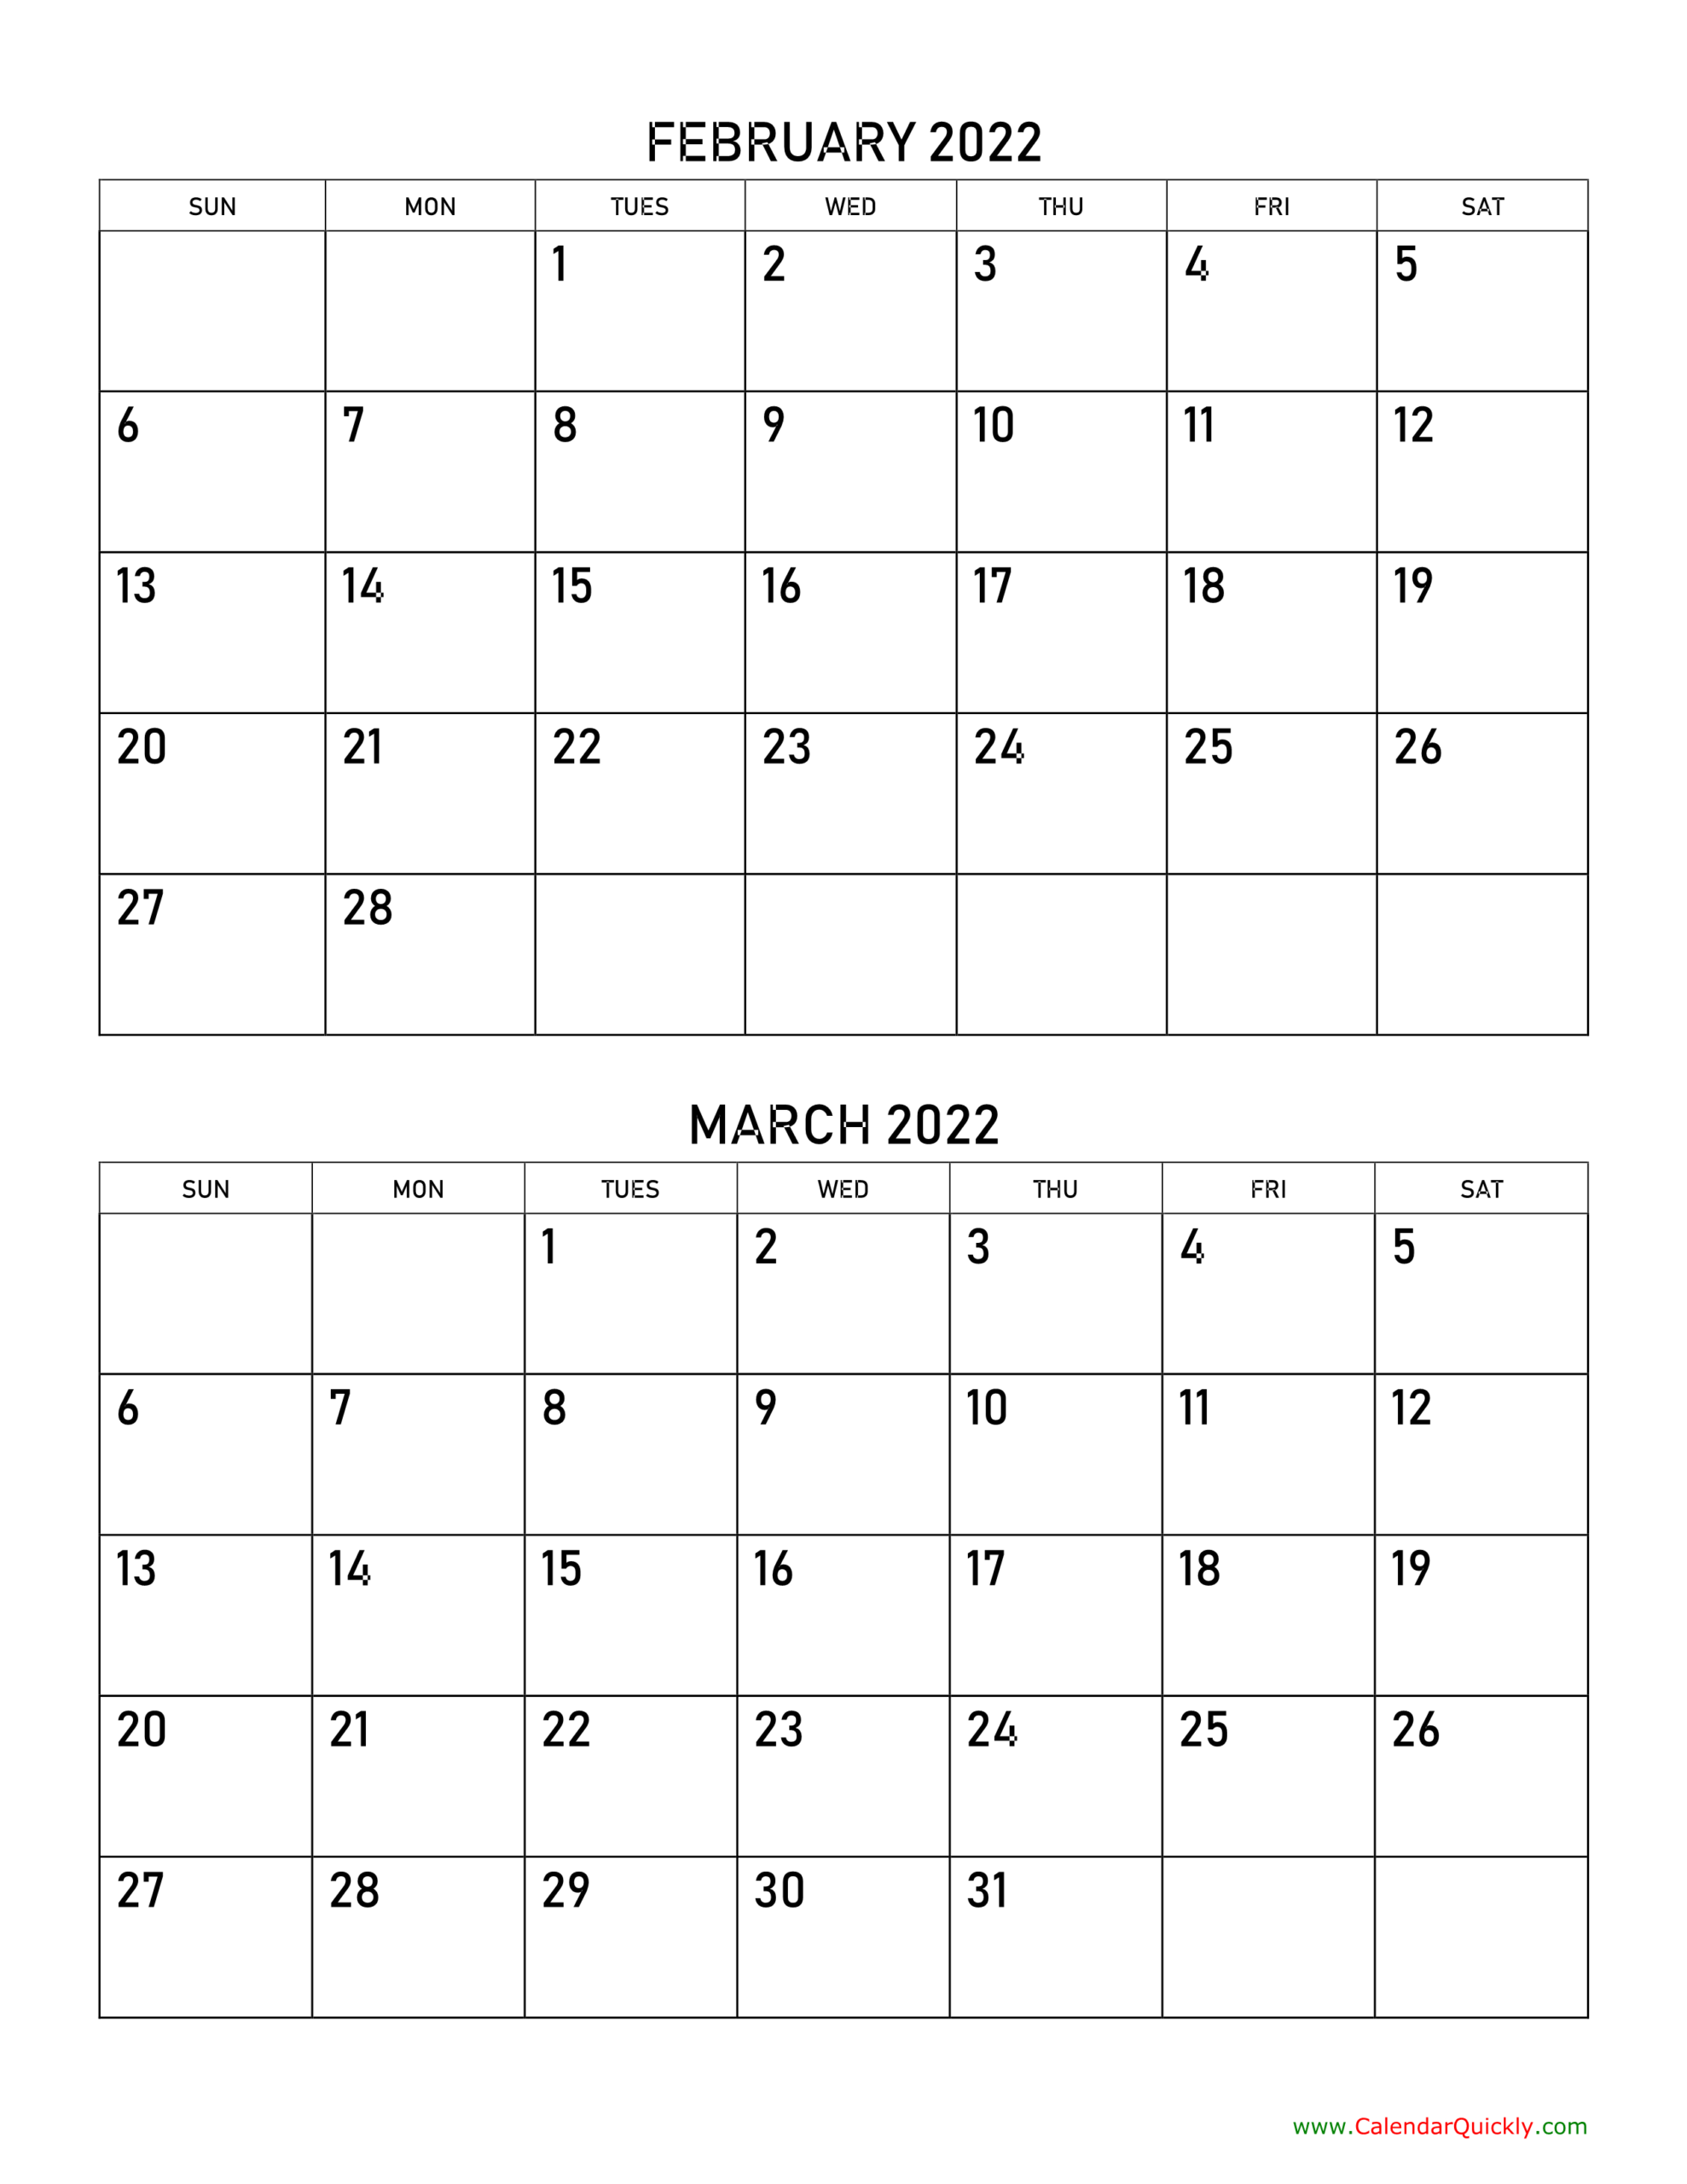 February And March 2022 Calendar | Calendar Quickly  April 2022 To March 2022 Calendar